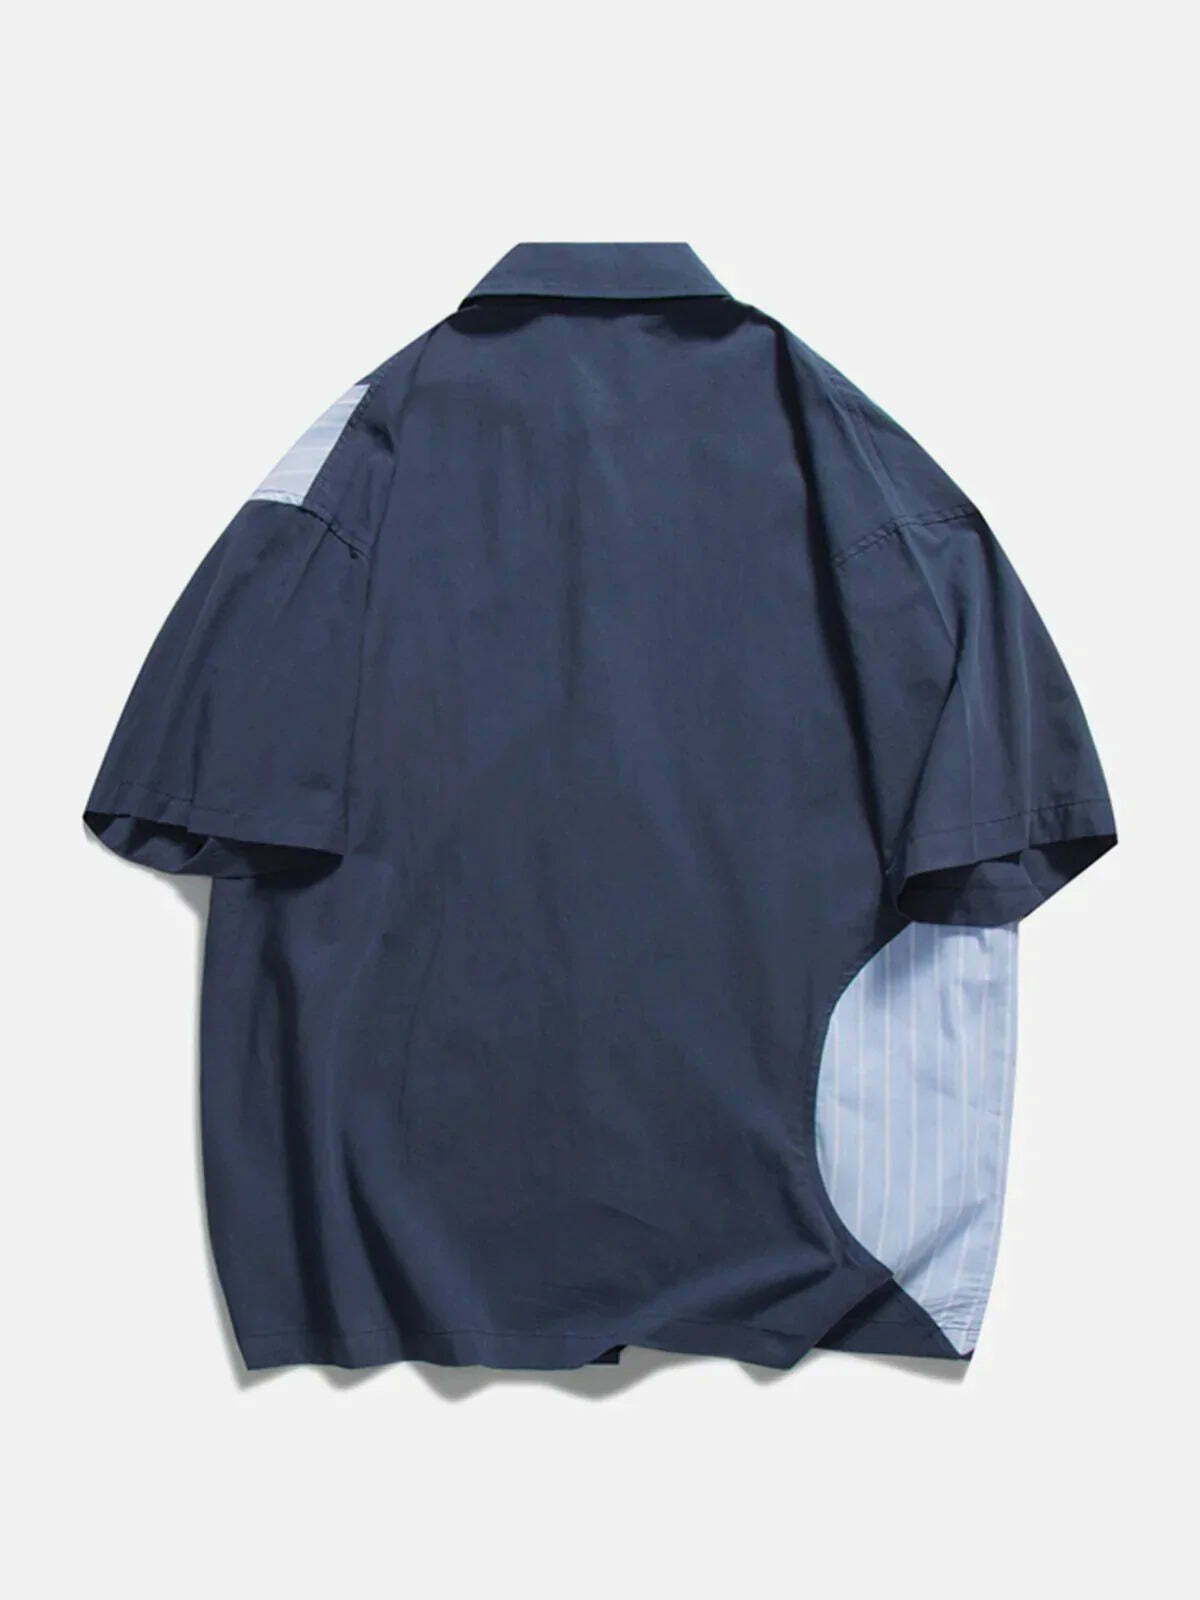 panel stripe short sleeve shirt curved & retro urban essential 7843